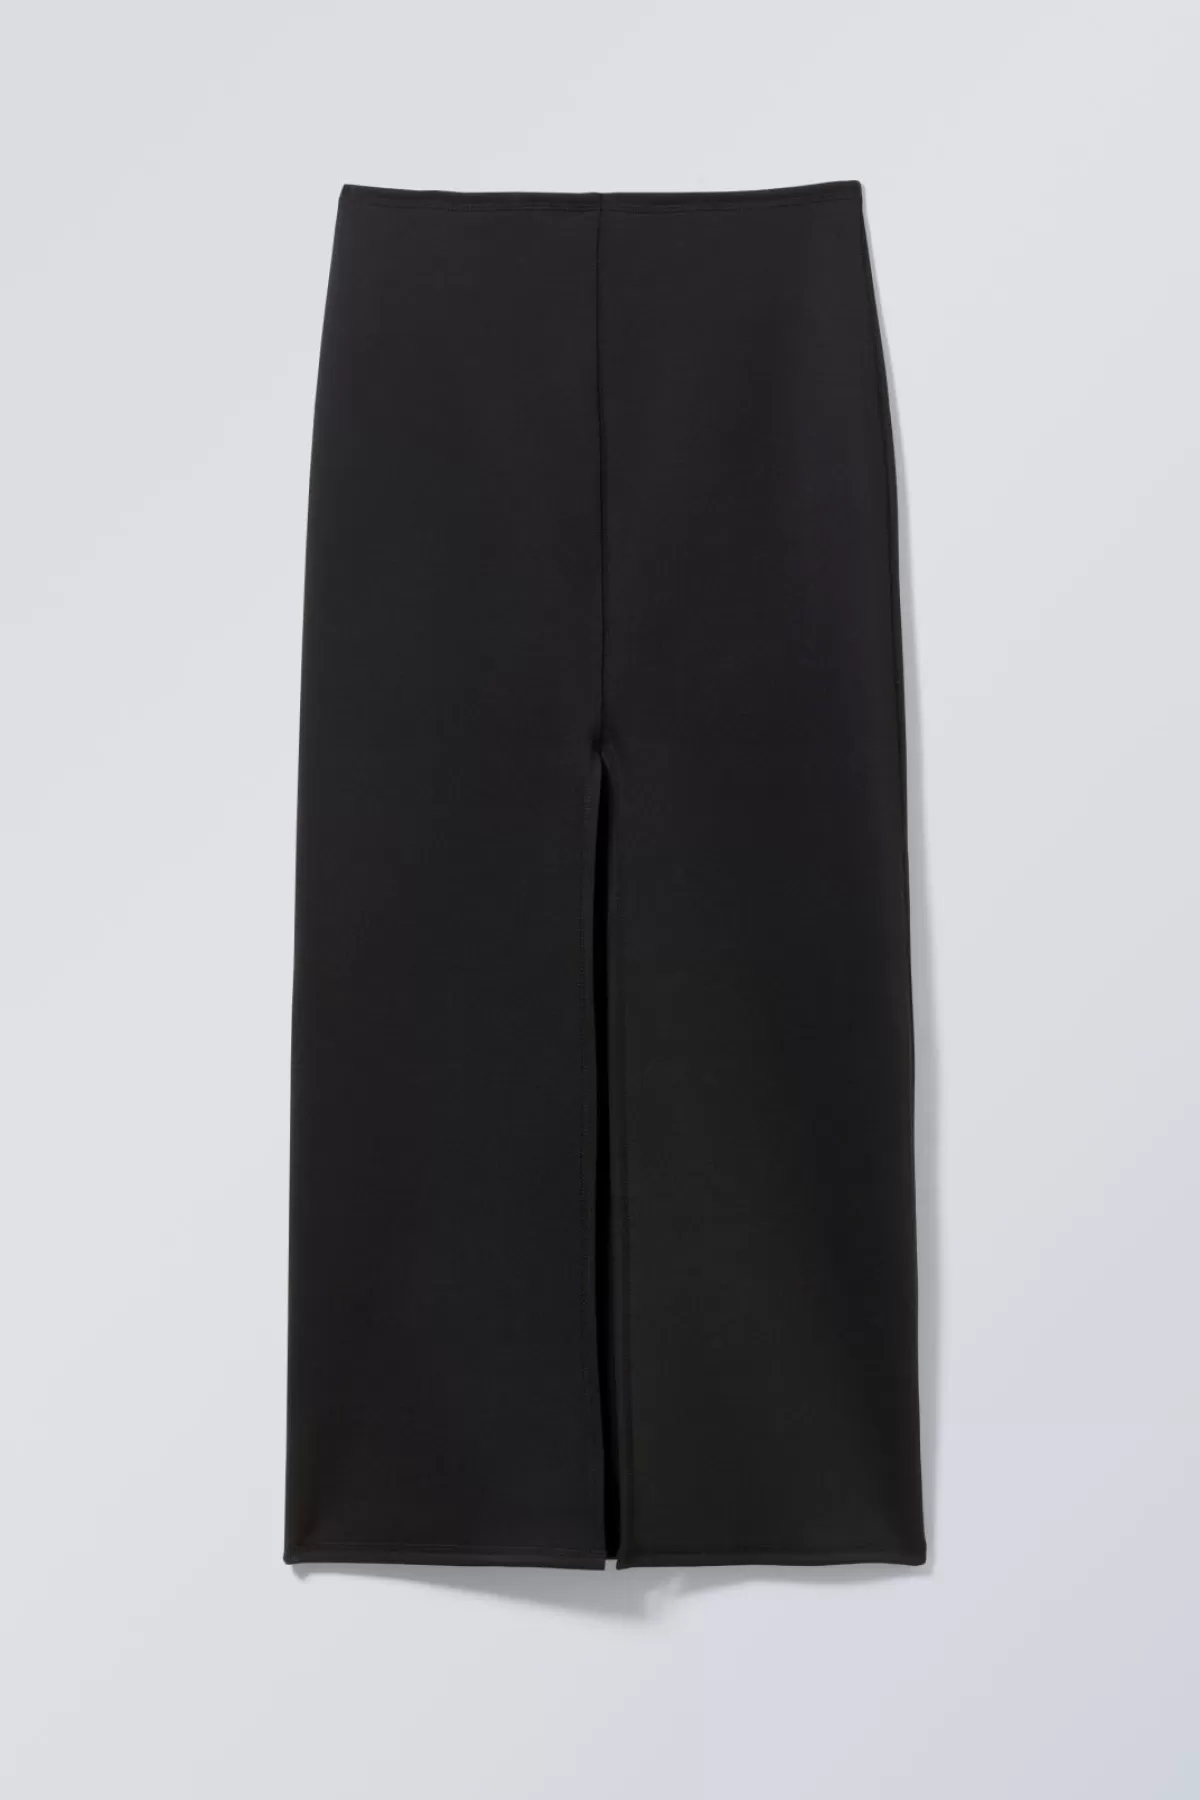 Weekday Minimal Long Skirt Black Cheap